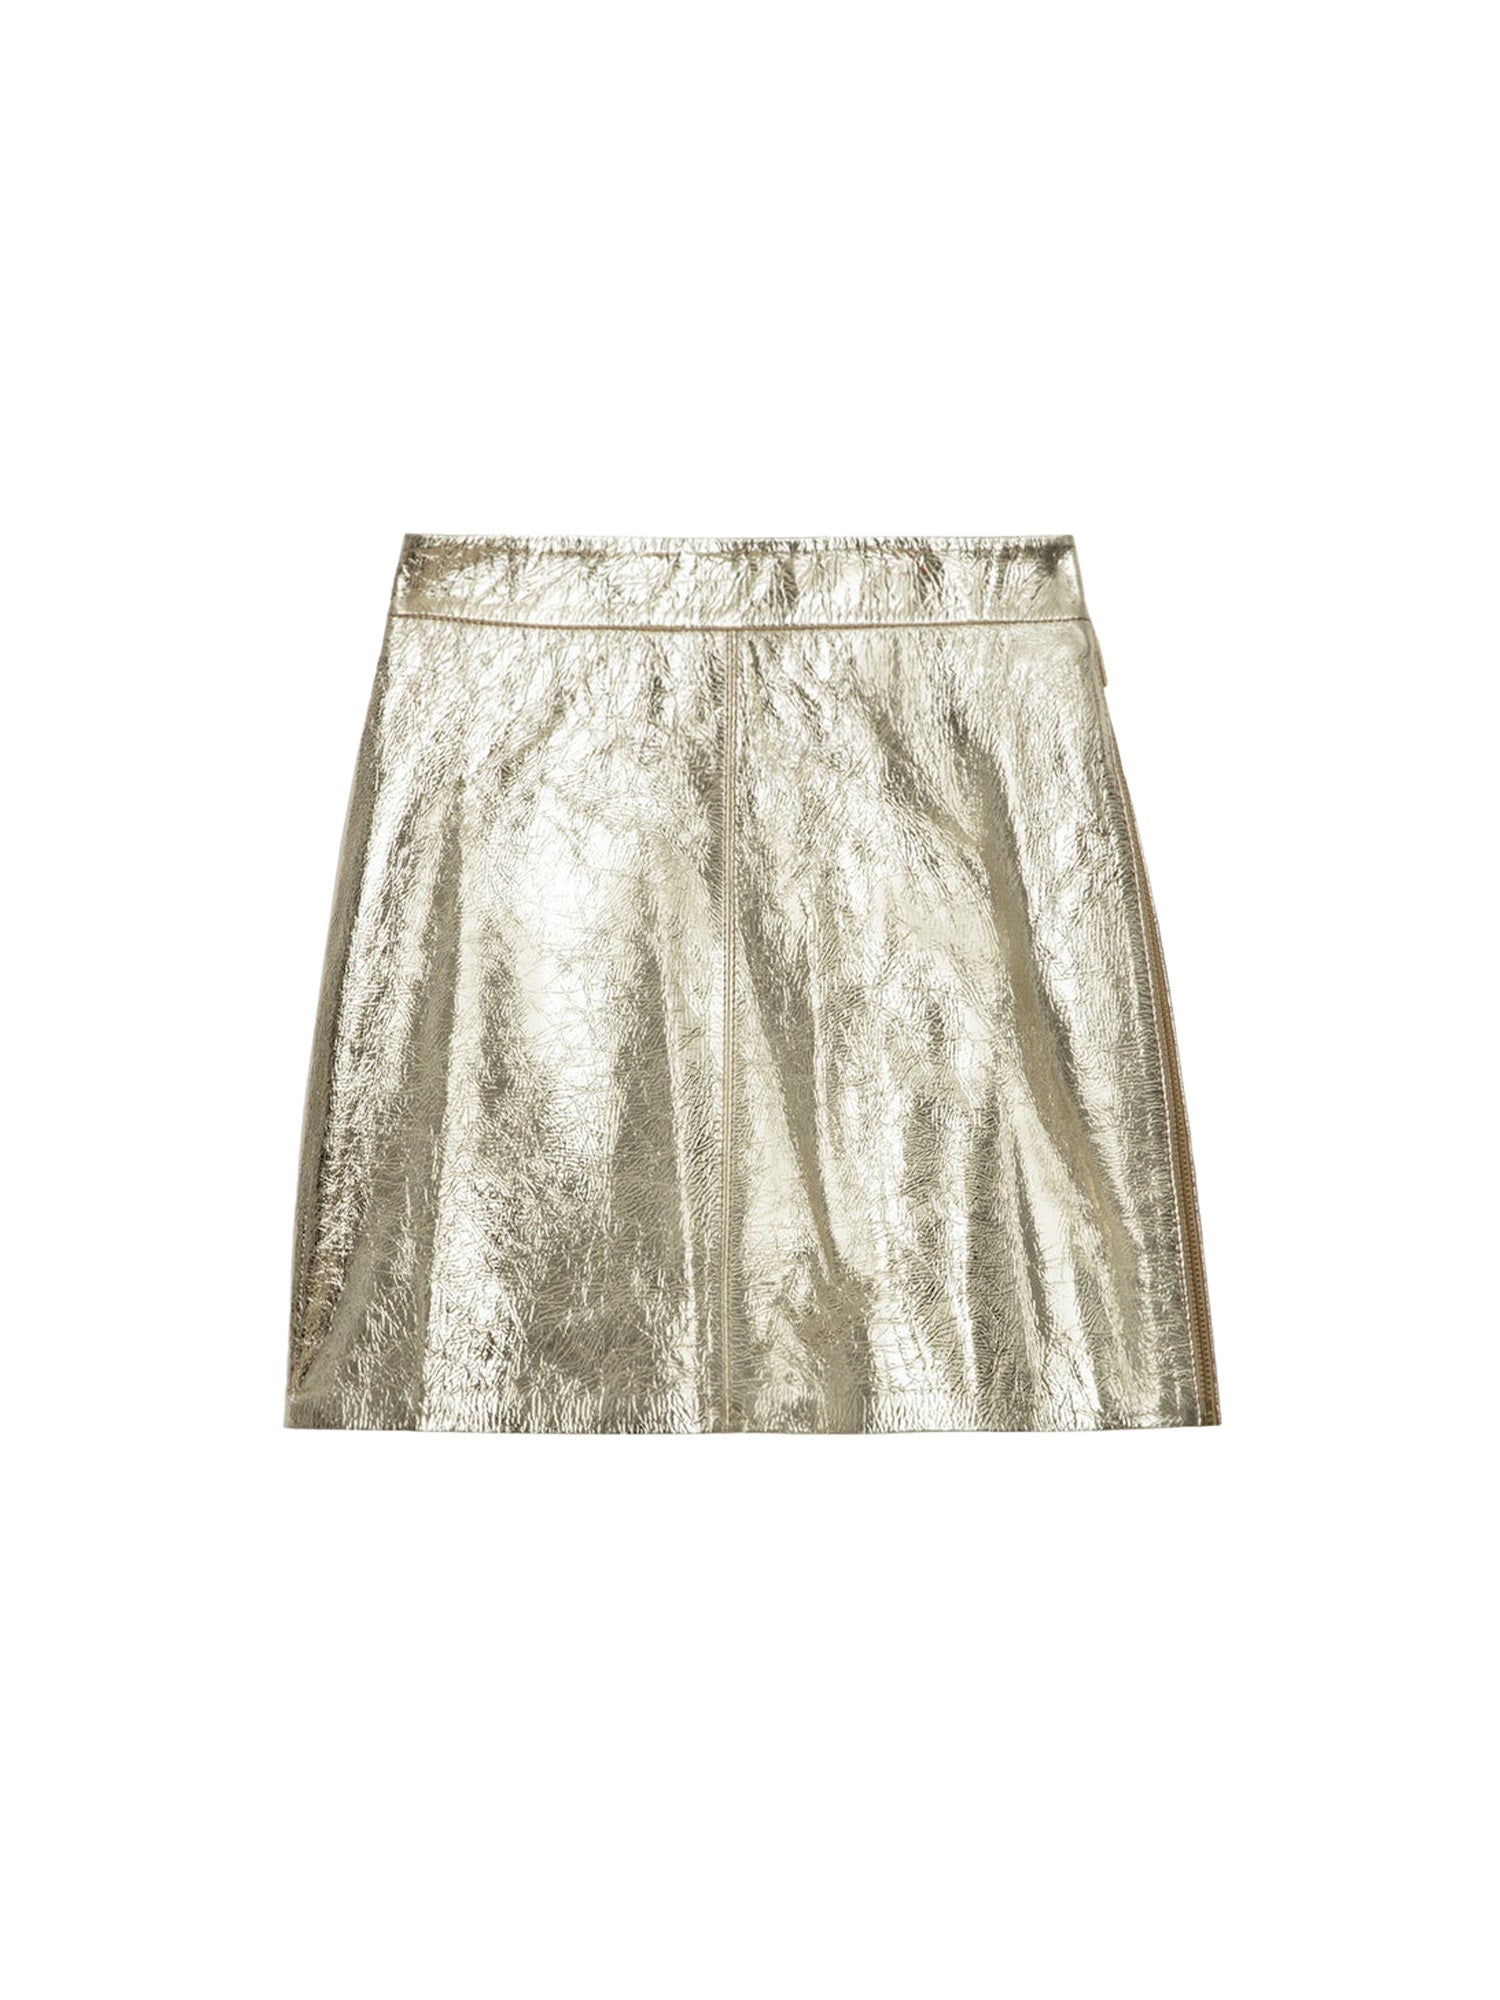 Zadig & Voltaire Jinette Metallic Leather Mini Skirt